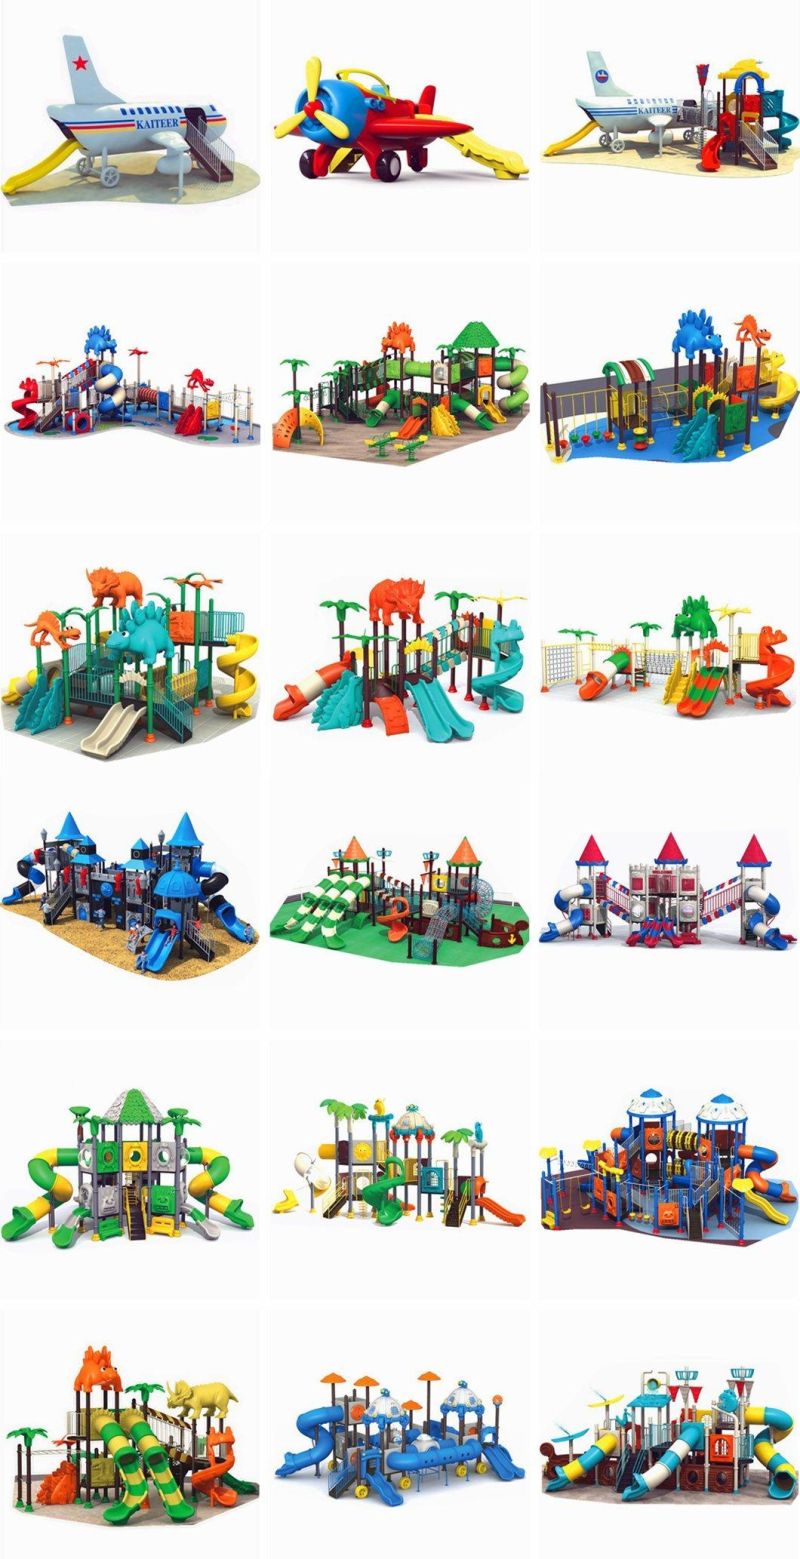 Customized Outdoor Kids Playground Amusement Park Equipment Slide Climbing 330b